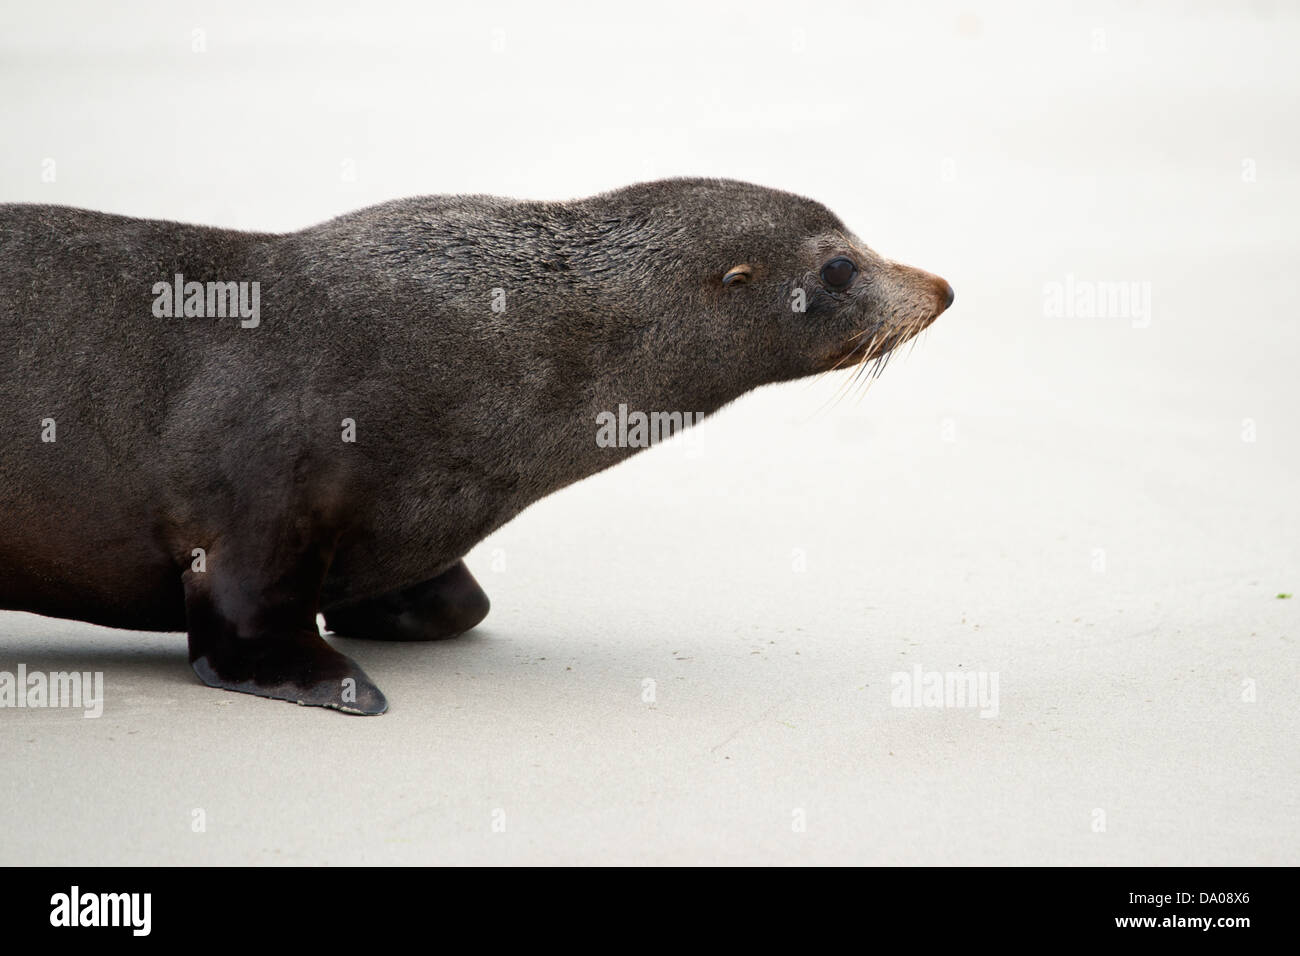 Fur seal puppy walking on the sandy beach Stock Photo